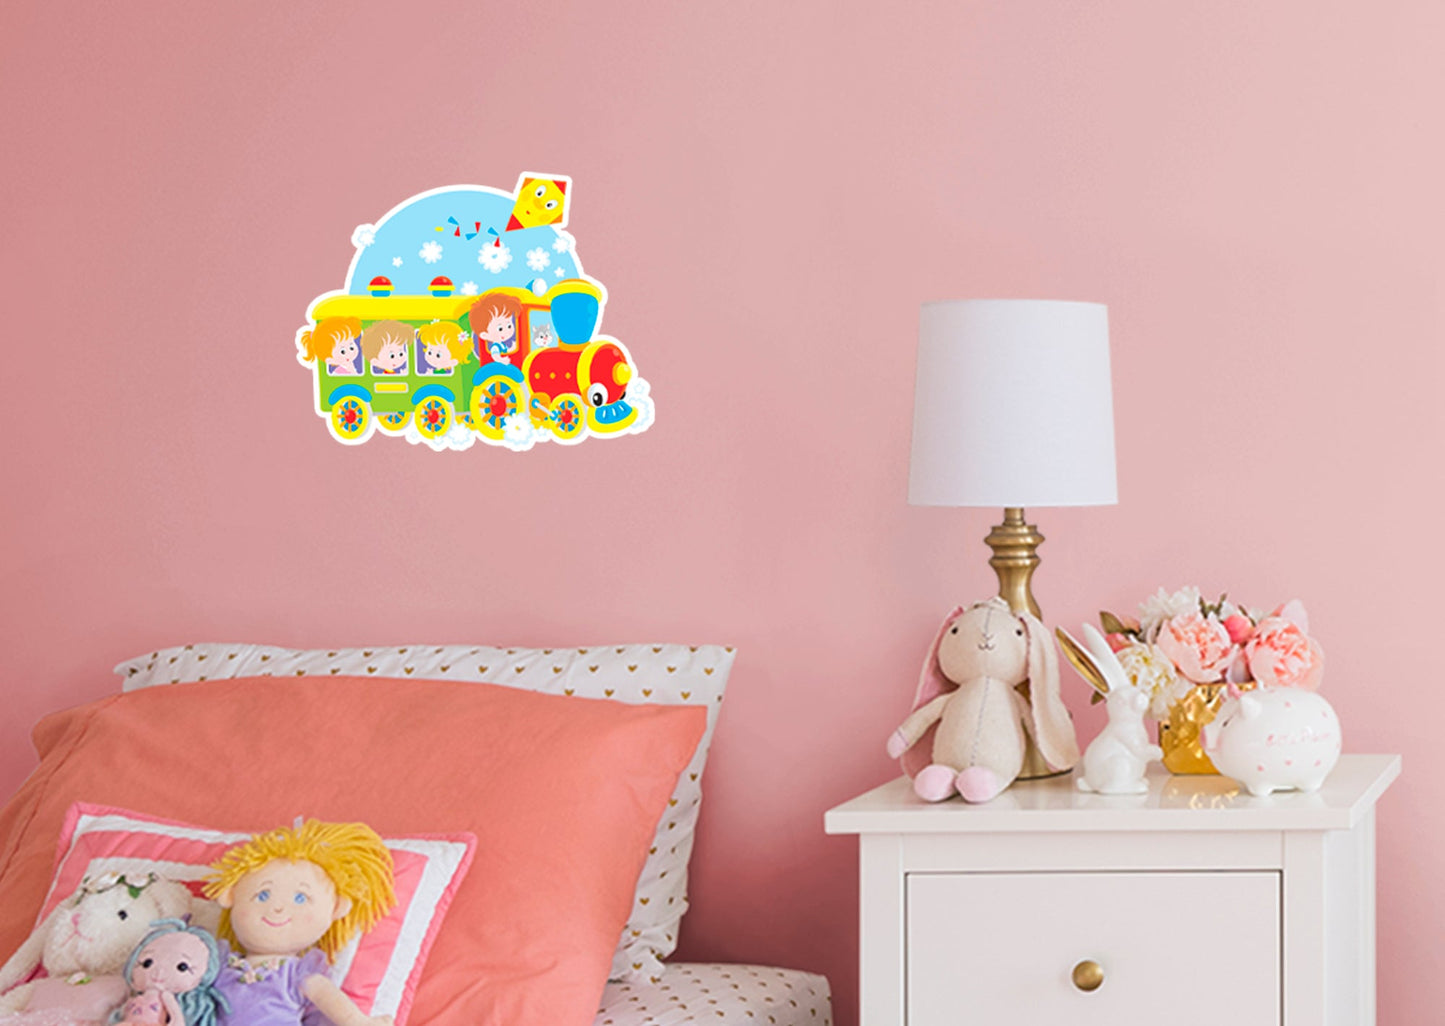 Nursery:  Kite Icon        -   Removable Wall   Adhesive Decal